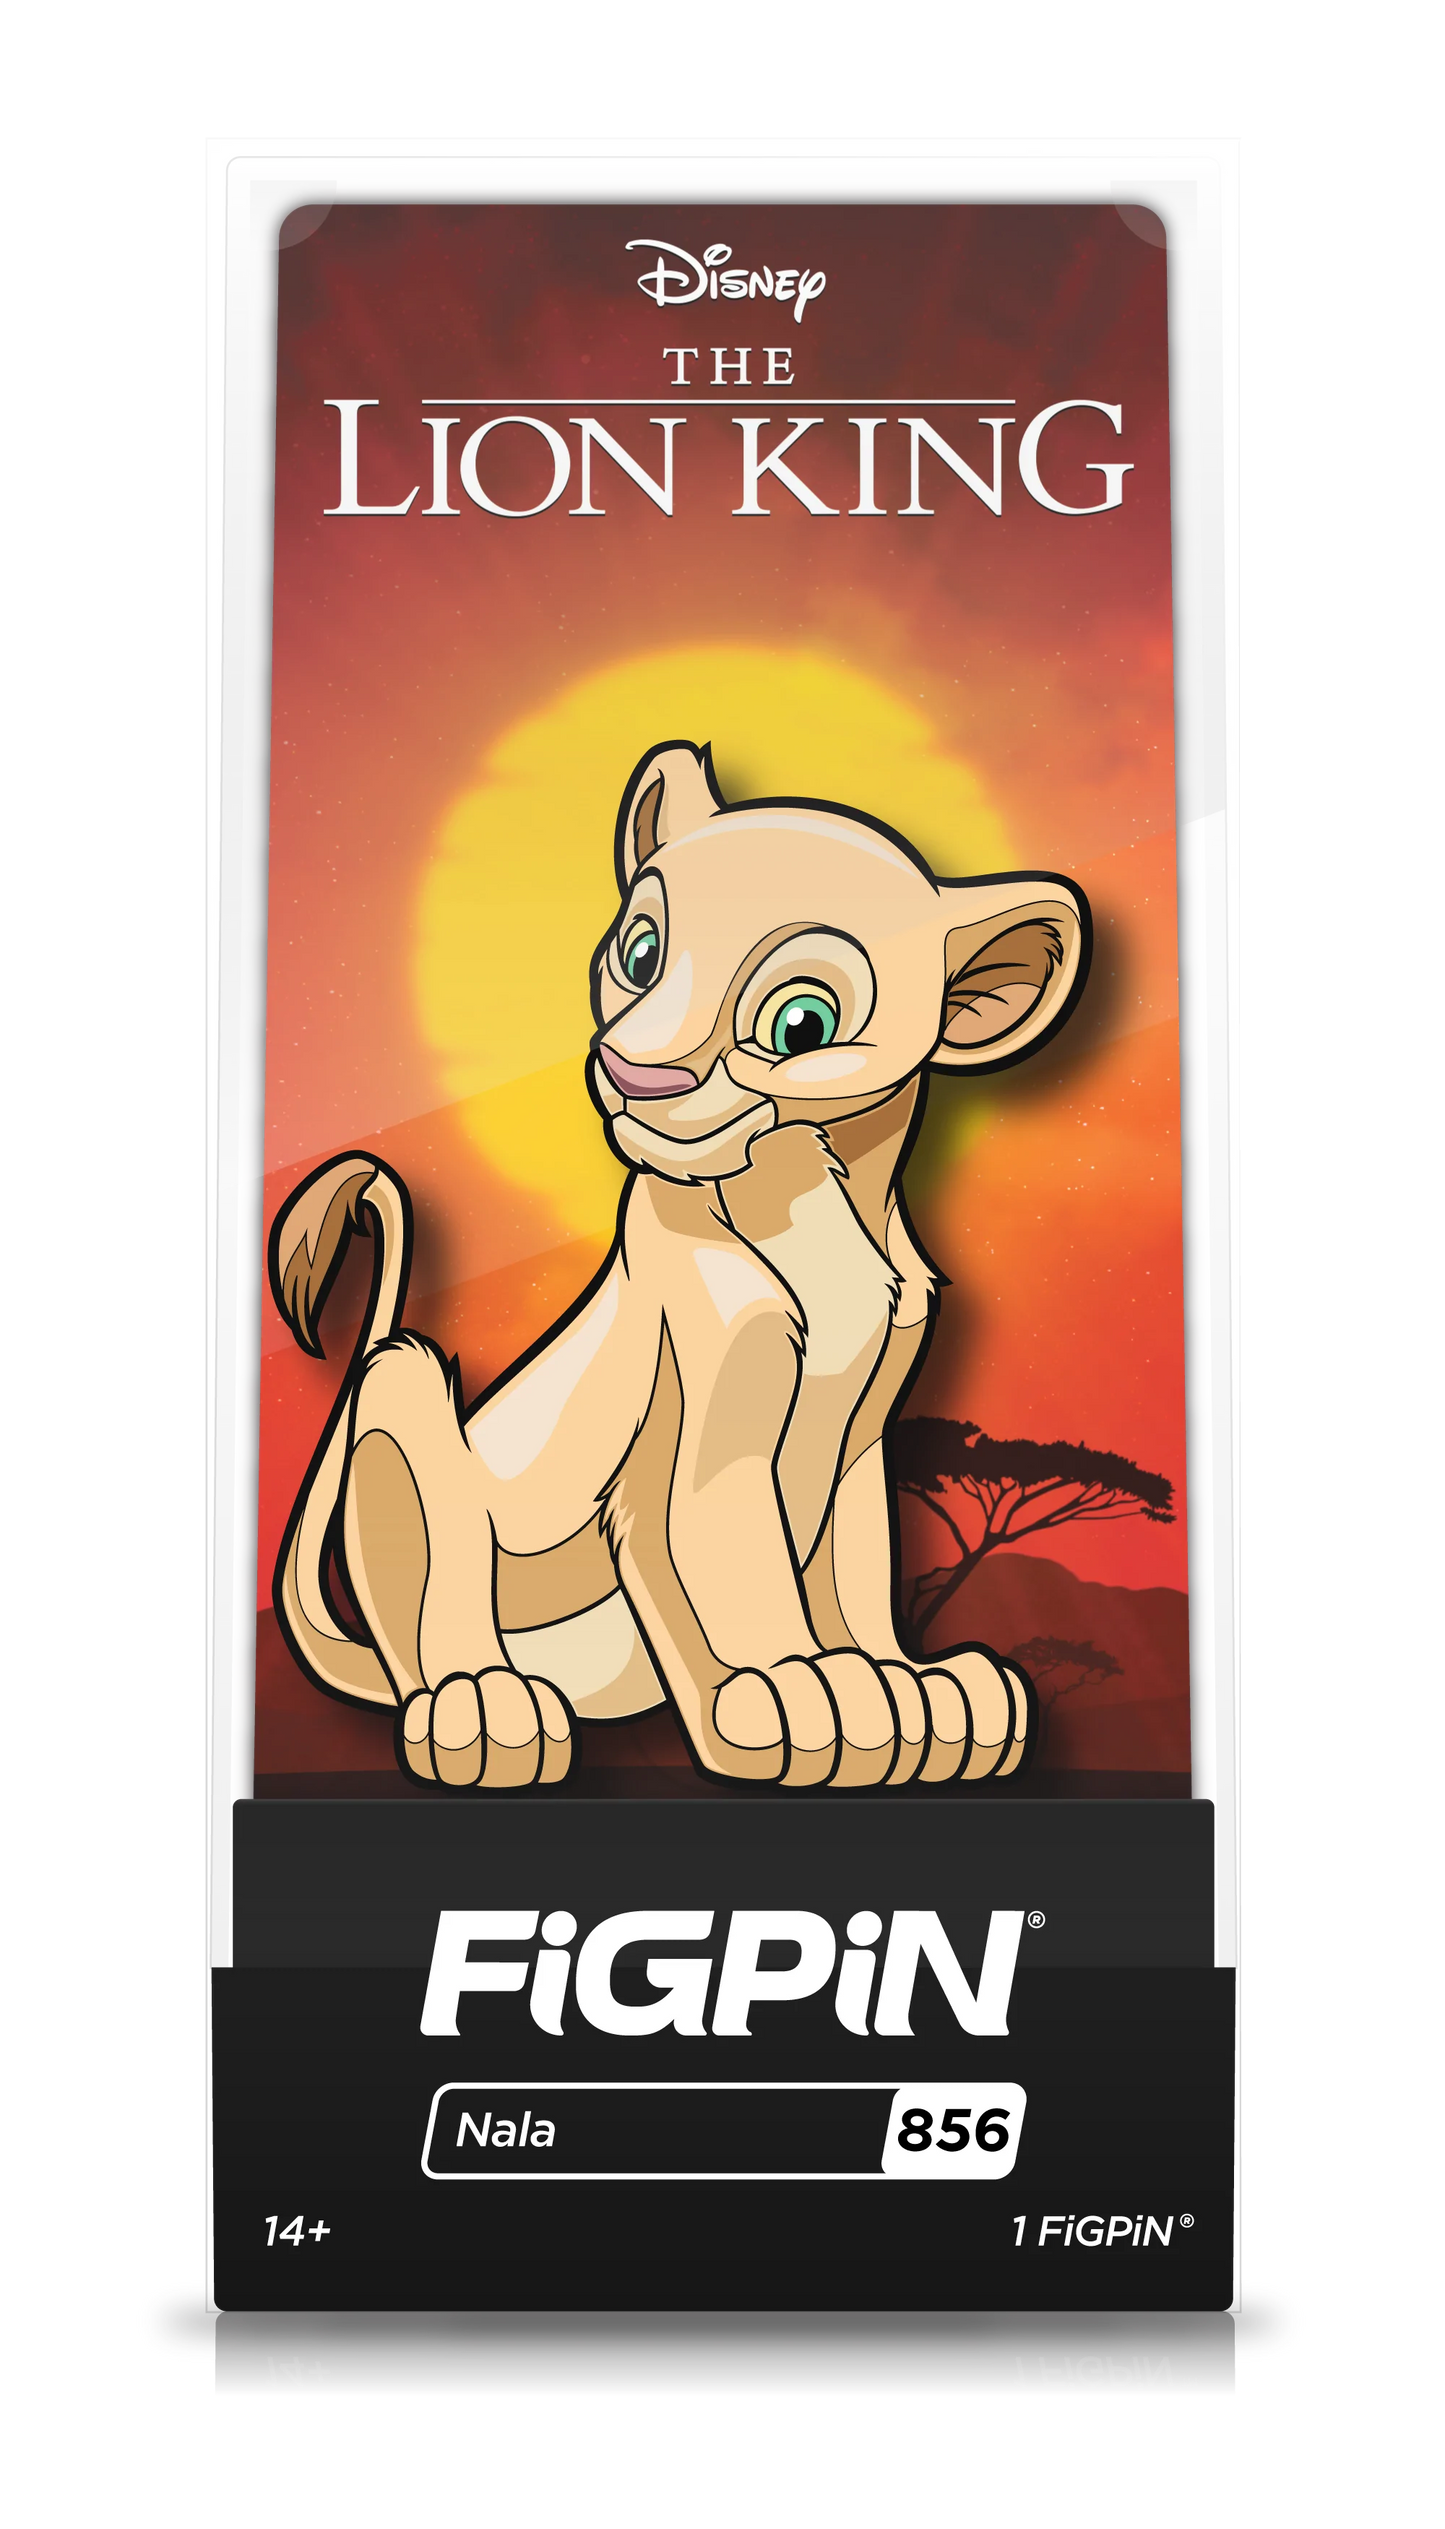 FiGPiN Nala (856) Property: The Lion King